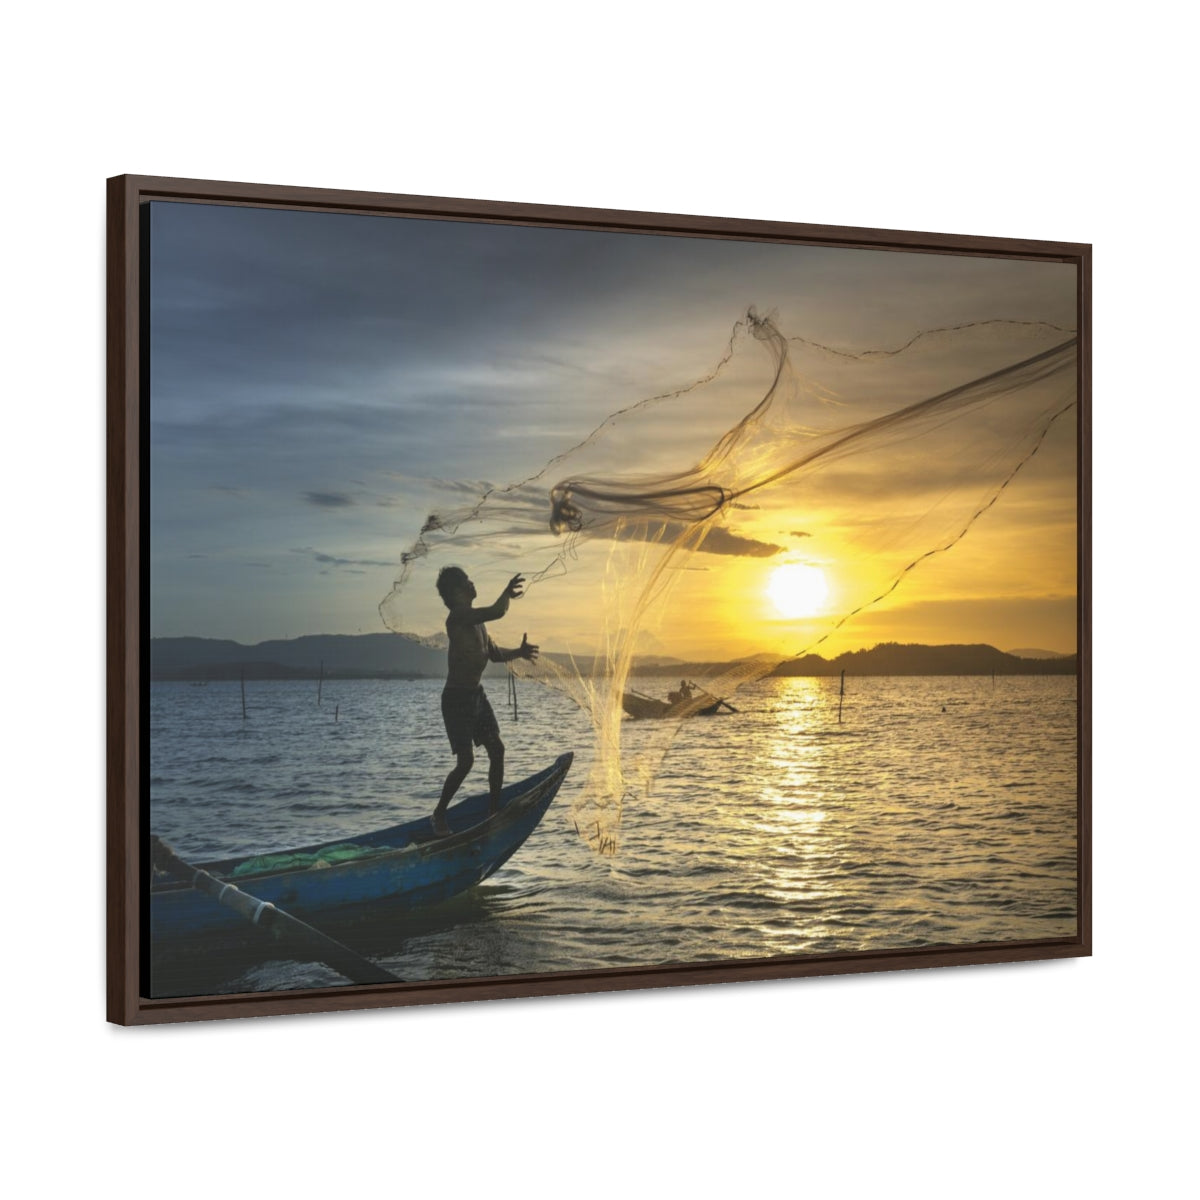 Fishing Net at Sunset Canvas Print